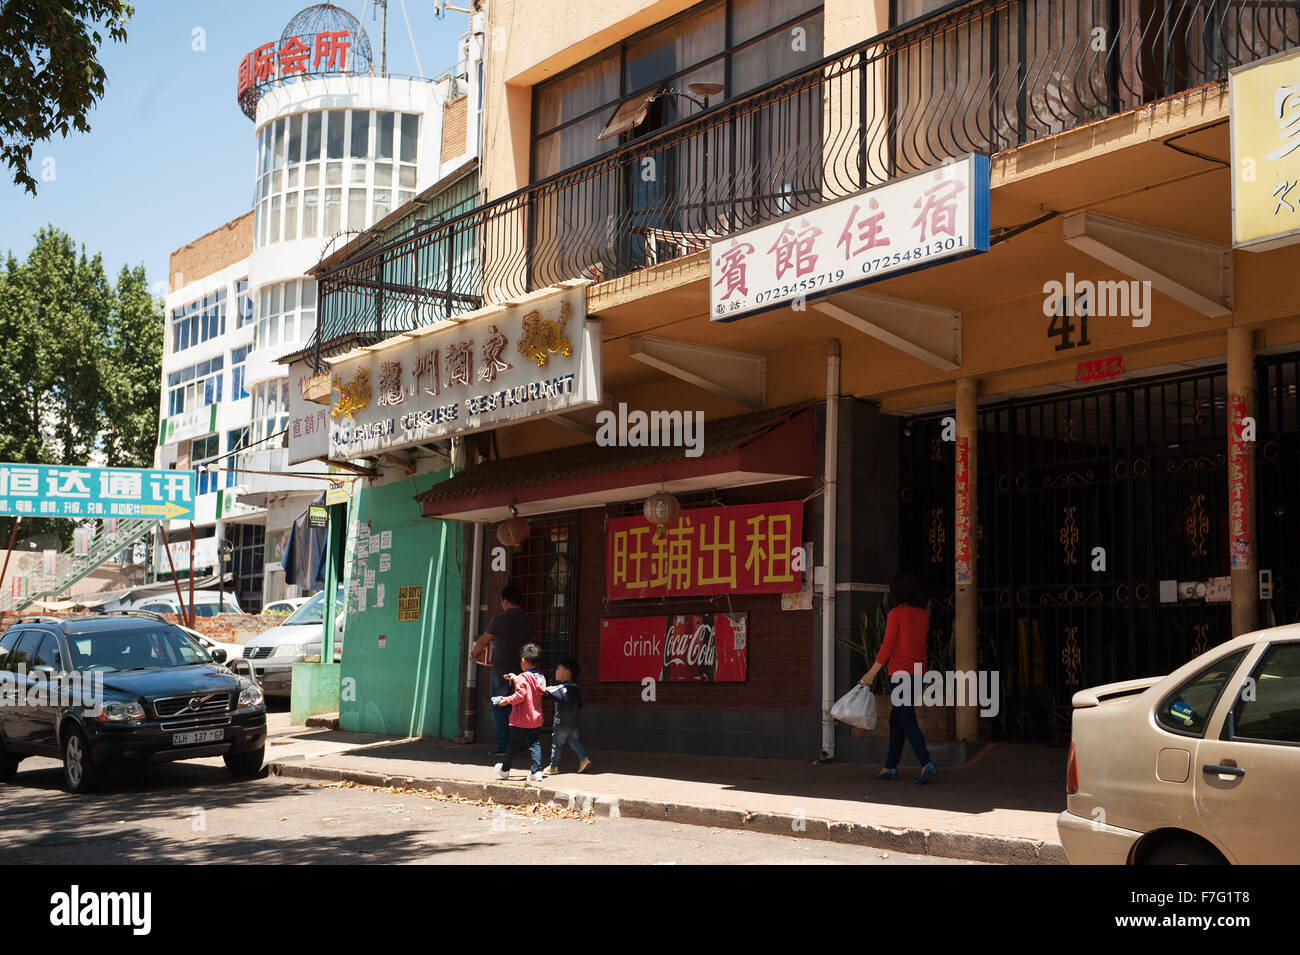 The Chinatown neighbourhood of Johannesburg, South Africa. Stock Photo